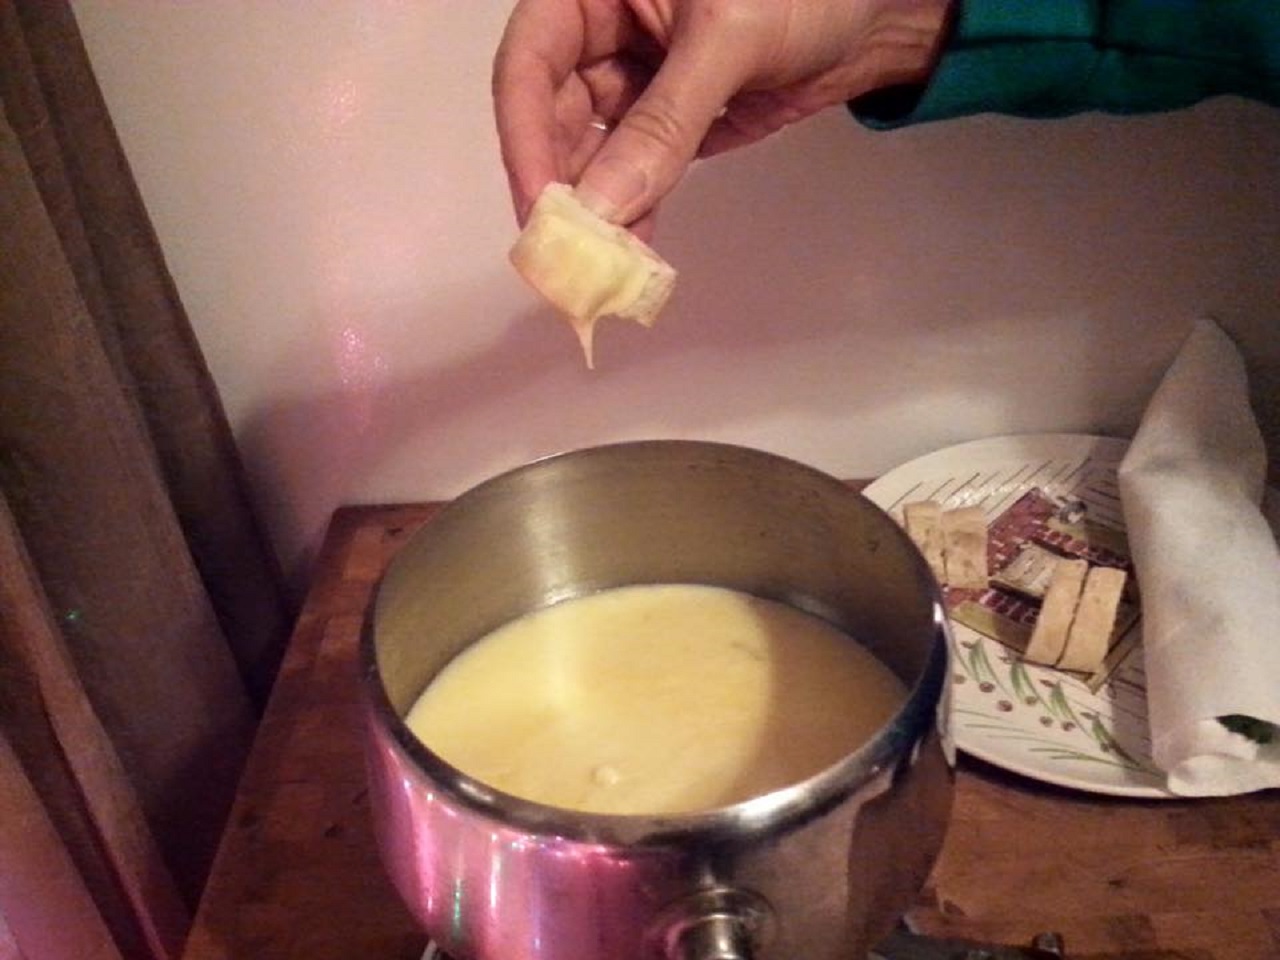 bakery story 2 problem using fondue